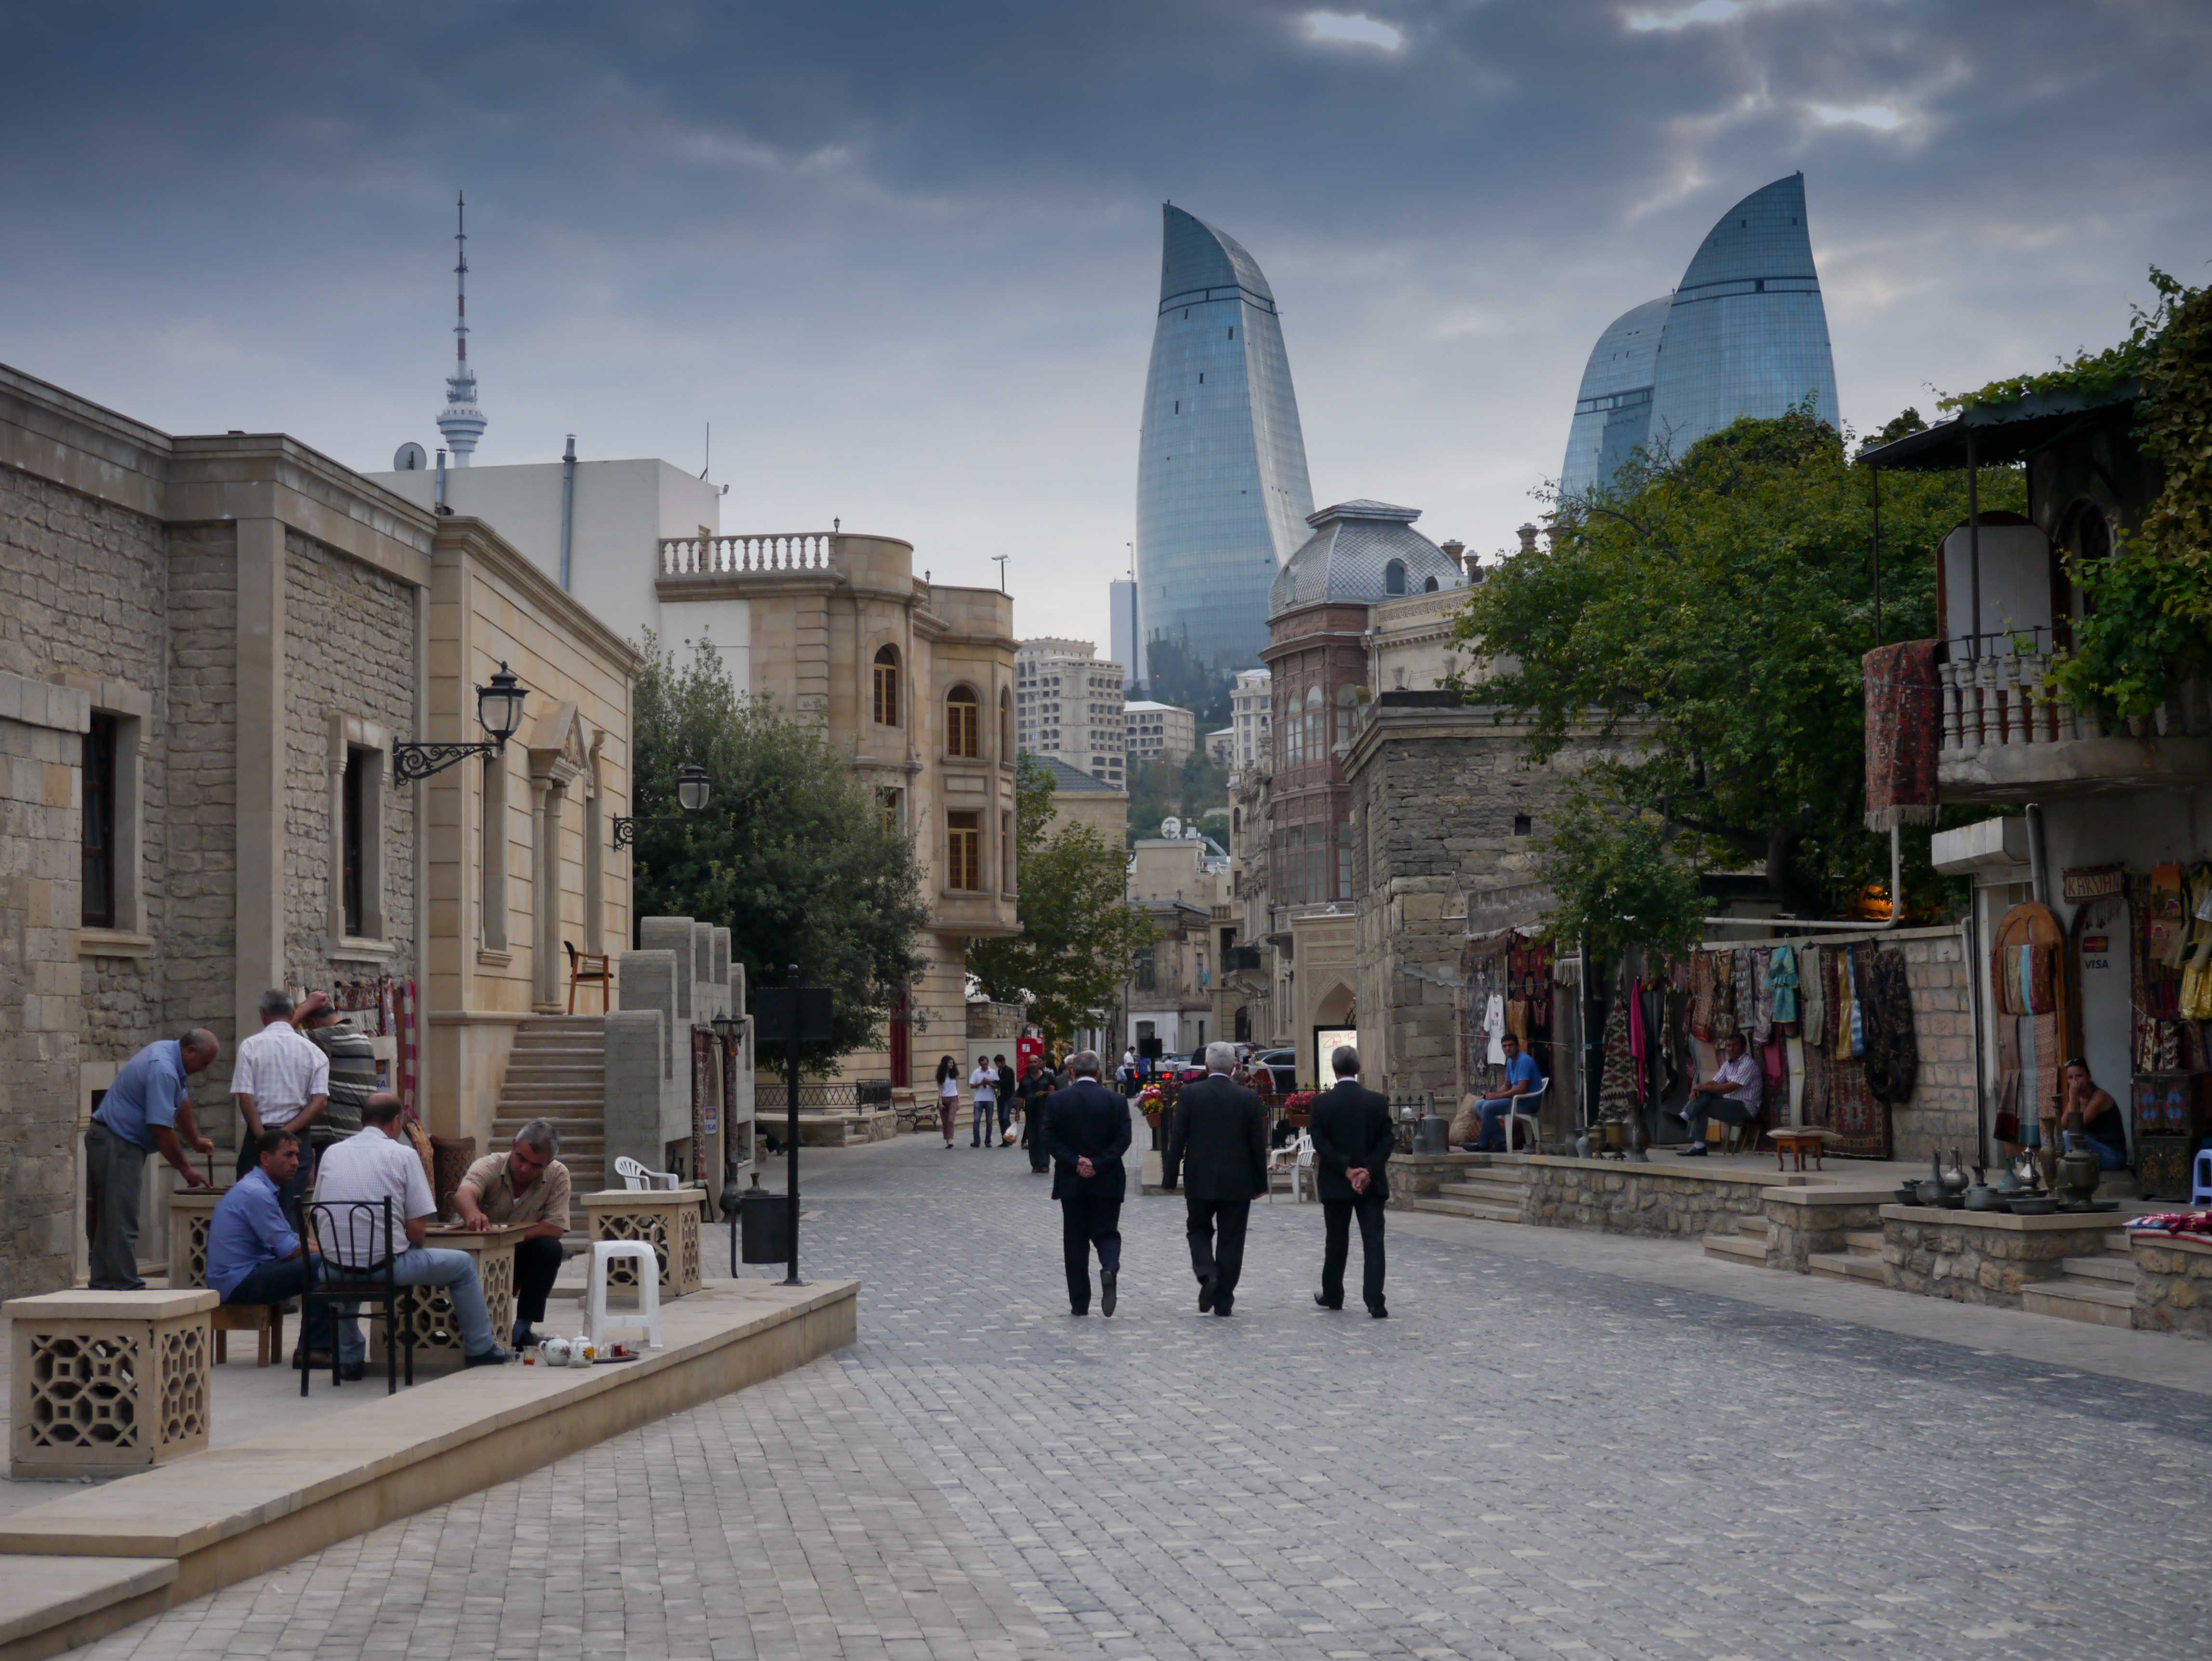 Baku - interesting city for Europeans: Polish expert